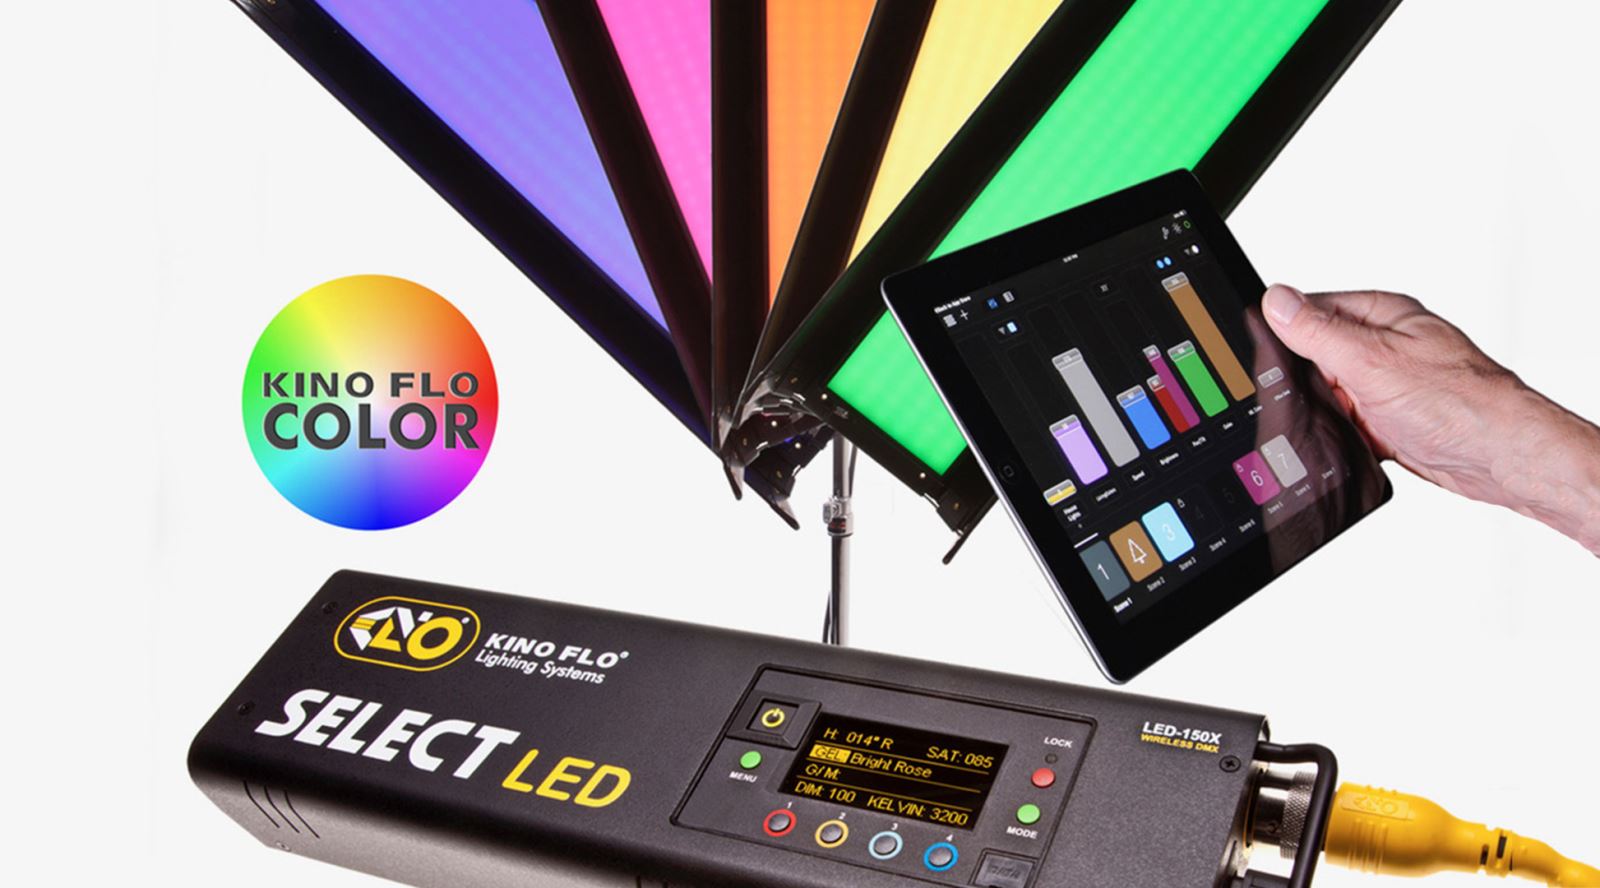 Kinoflo select 31 Color-LED